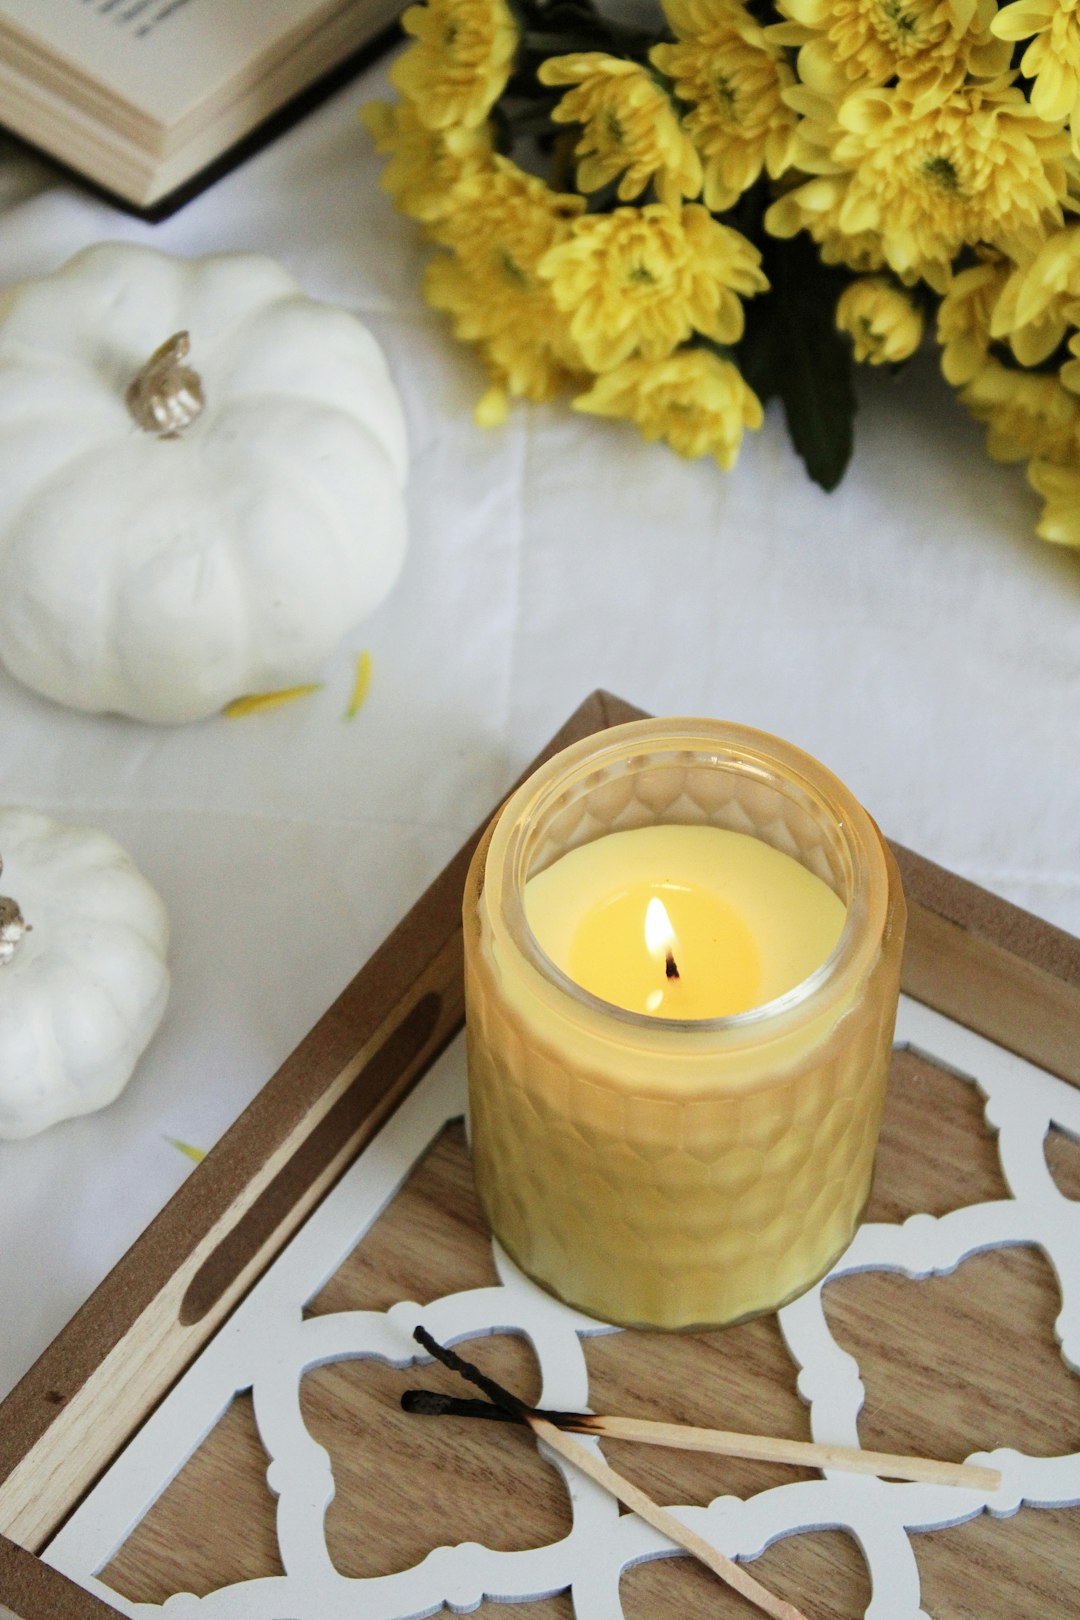 white pillar candle beside yellow flower